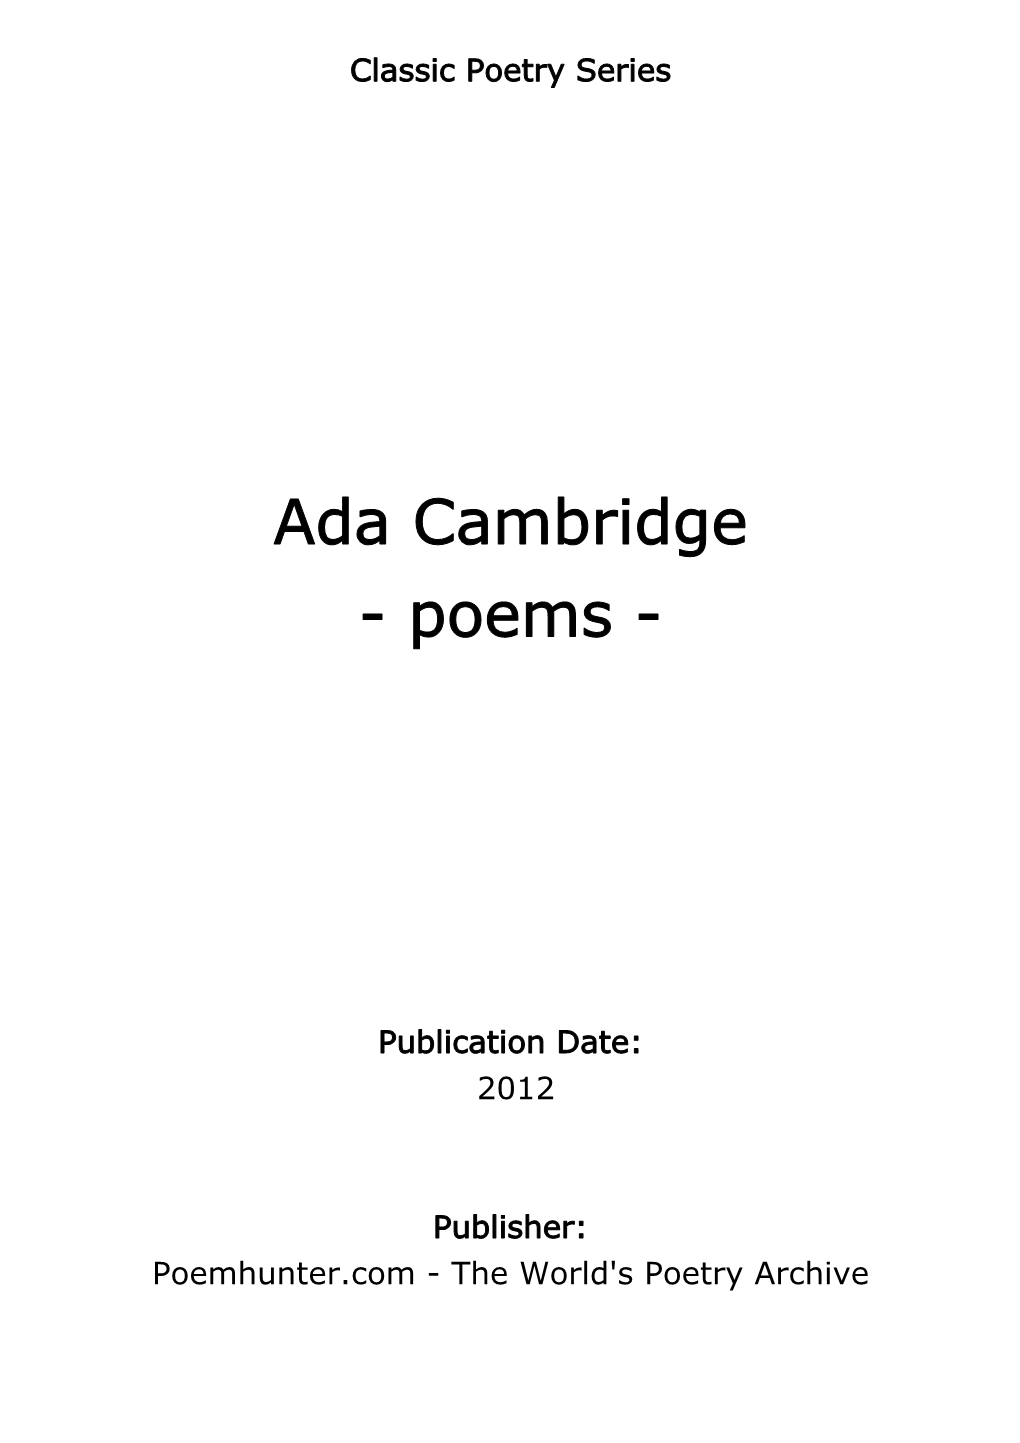 Ada Cambridge - Poems